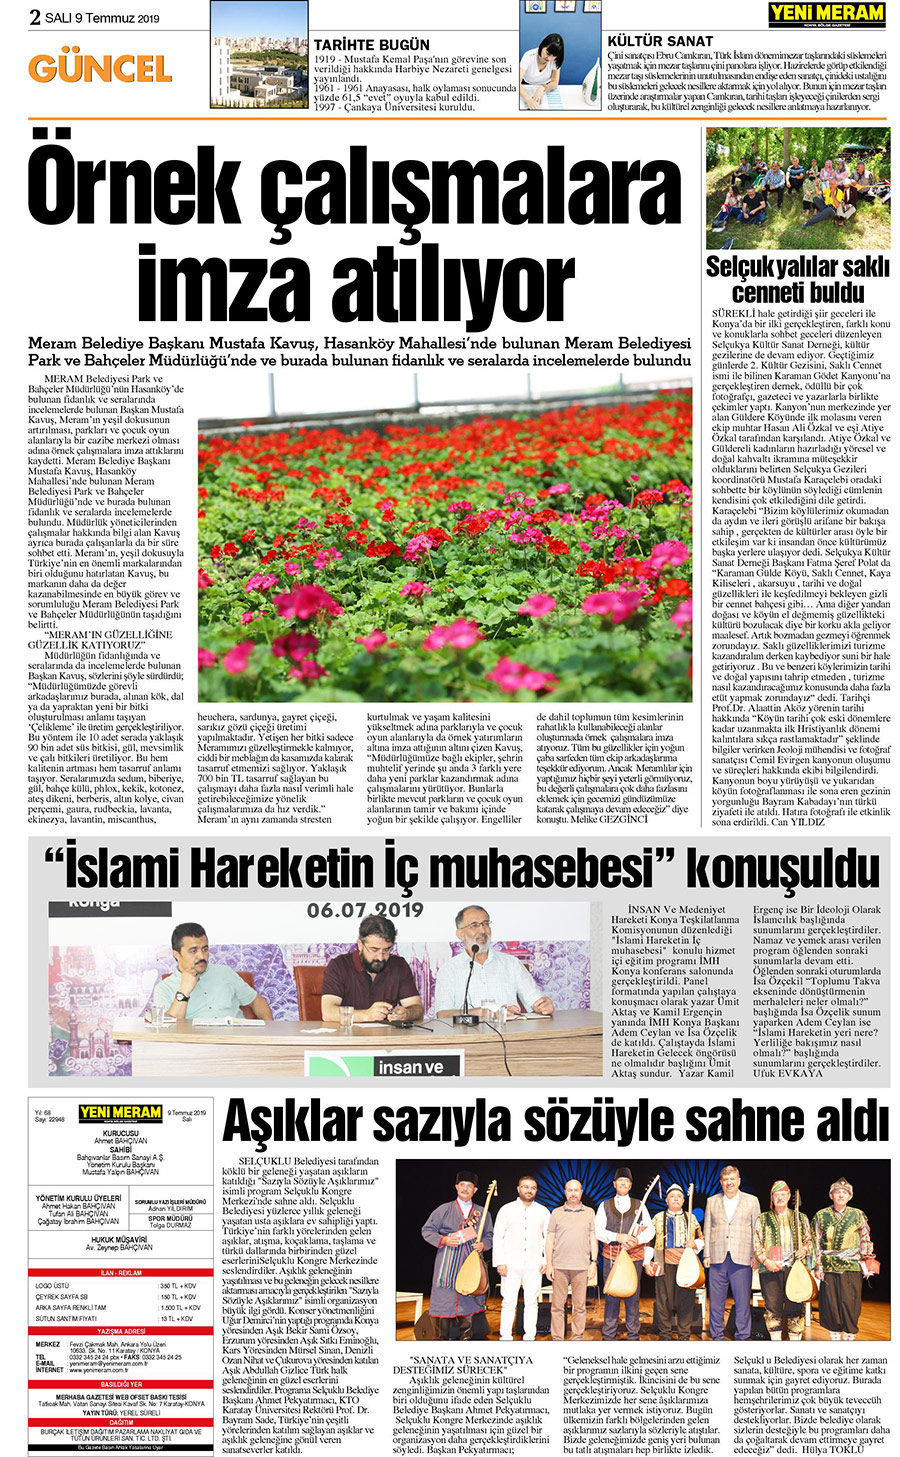 9 Temmuz 2019 Yeni Meram Gazetesi